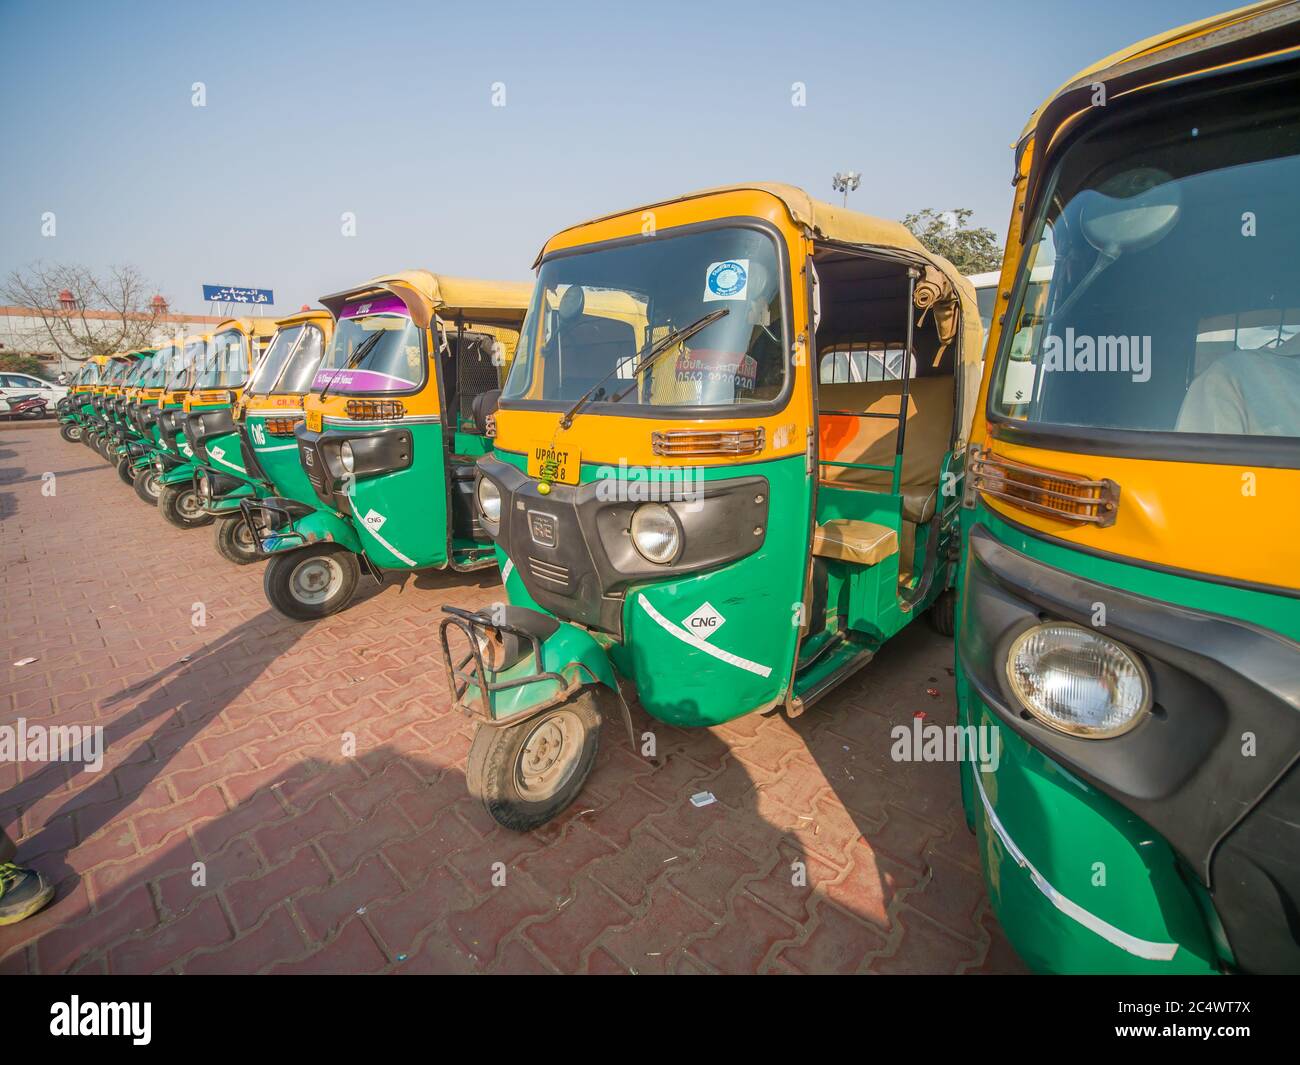 Mumbai, India - December 17, 2019: Yellow and green auto rickshaws in Indiya. Stock Photo